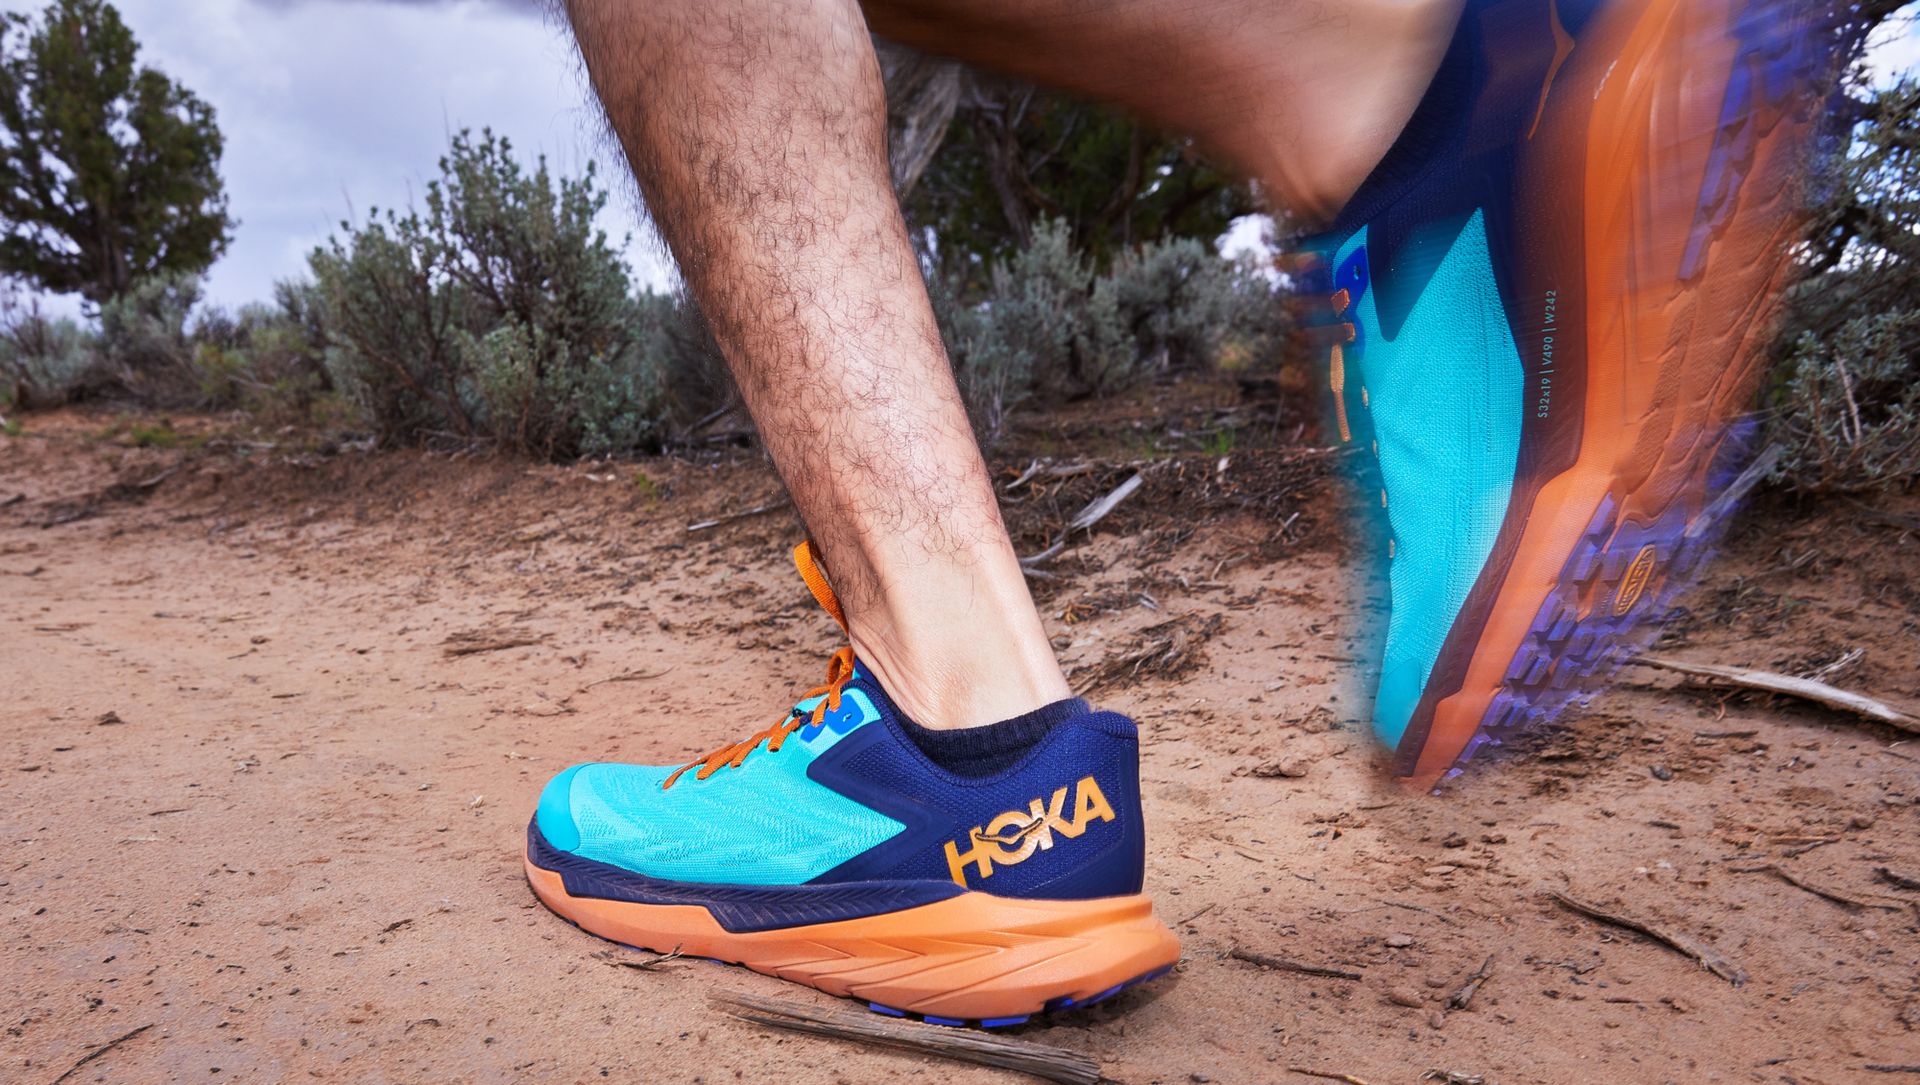 Which Hoka Running Shoe Has the Most Cushioning?